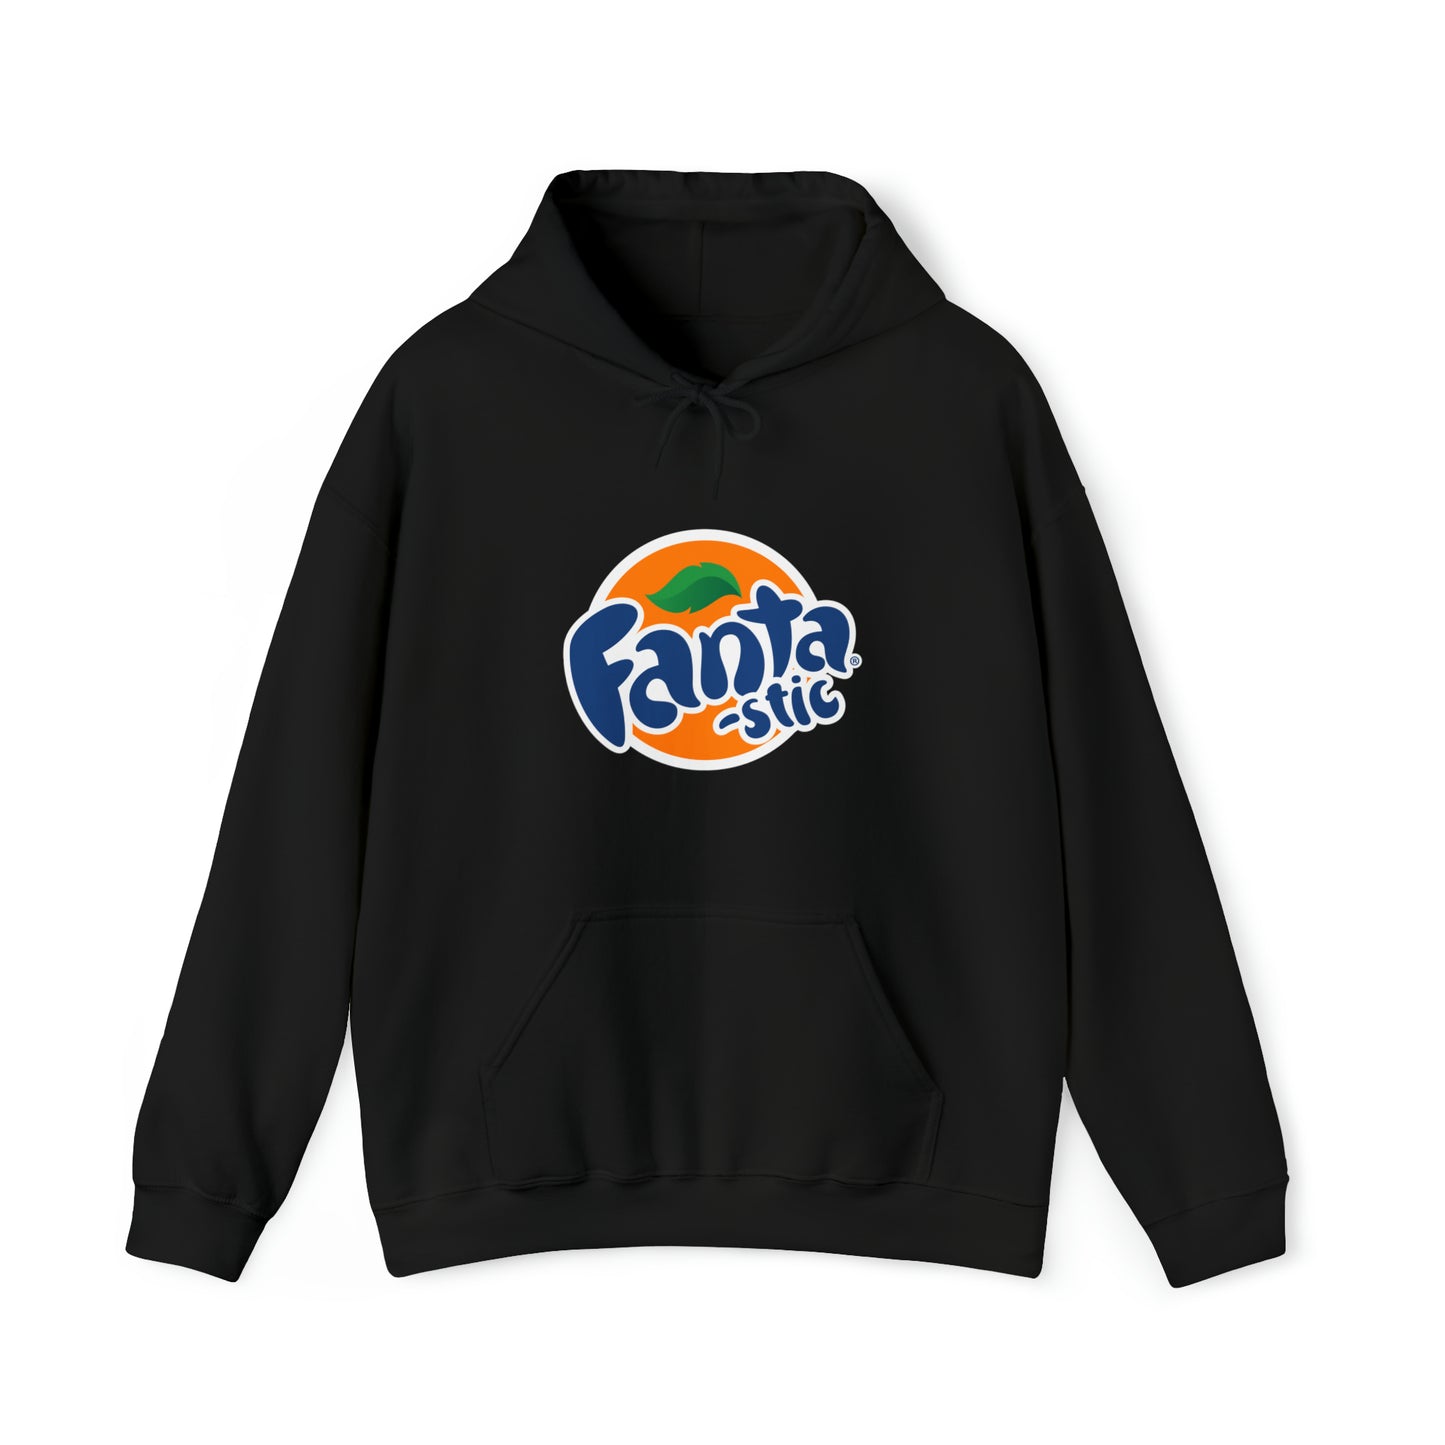 Custom Parody Hooded Sweatshirt, "Fanta-stic" design